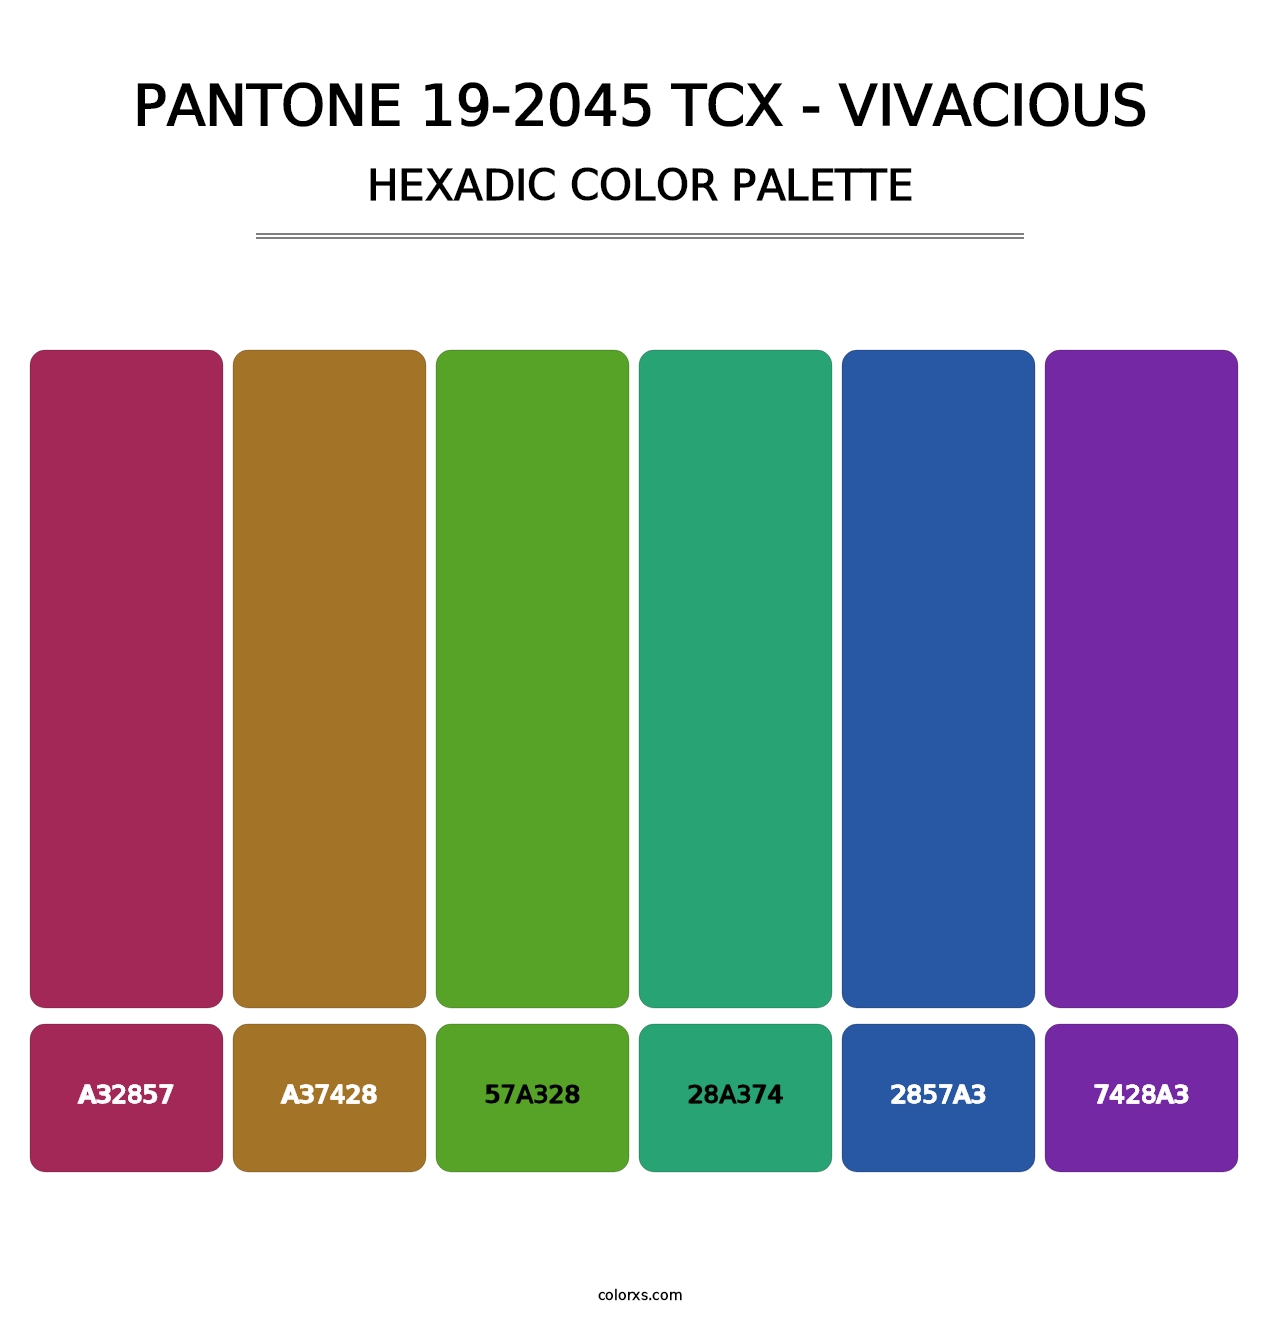 PANTONE 19-2045 TCX - Vivacious - Hexadic Color Palette